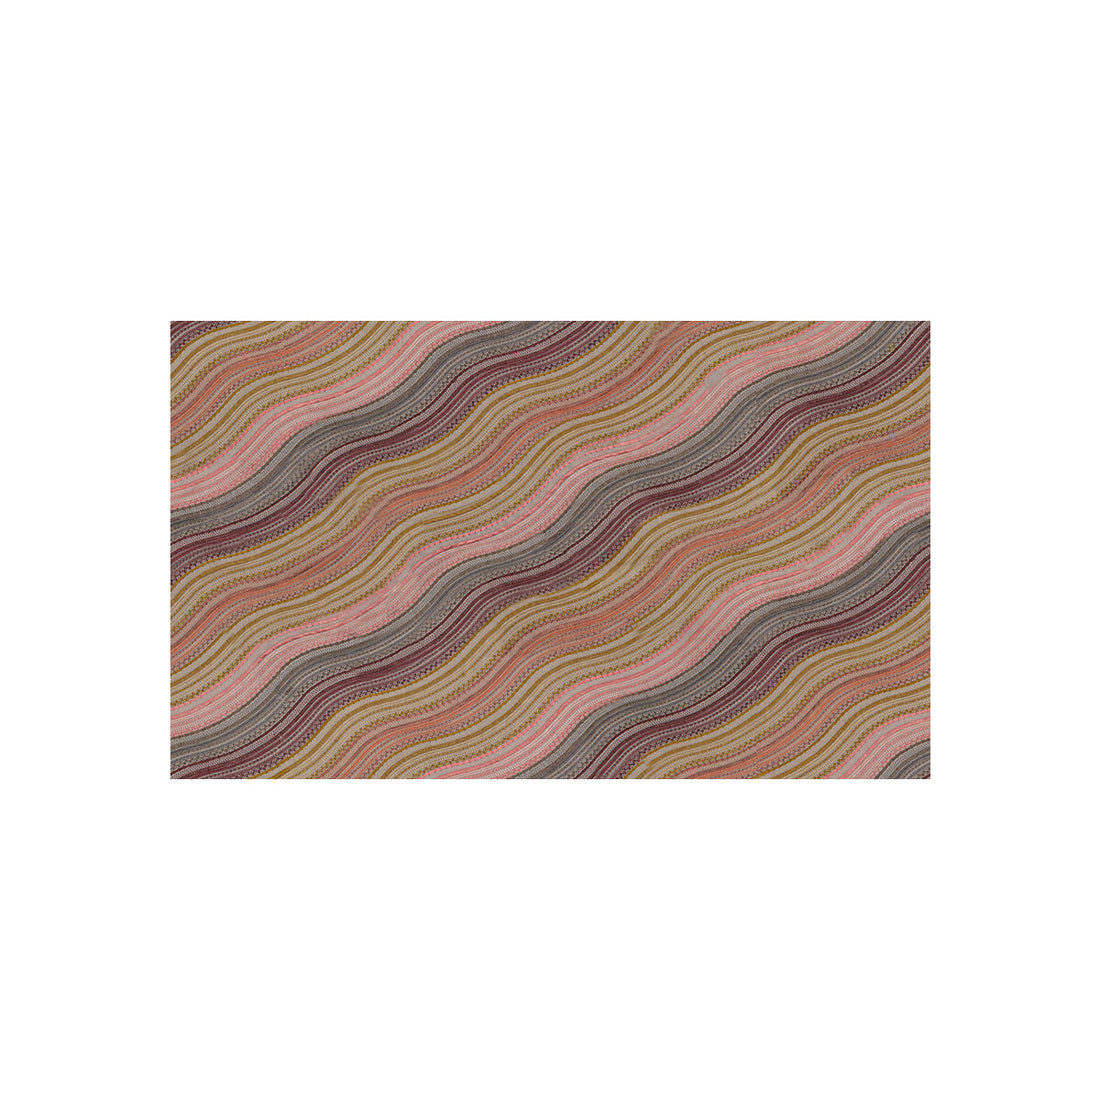 Water Stripe Emb fabric in raisin/rose color - pattern GWF-3100.916.0 - by Lee Jofa Modern in the Kelly Wearstler II collection